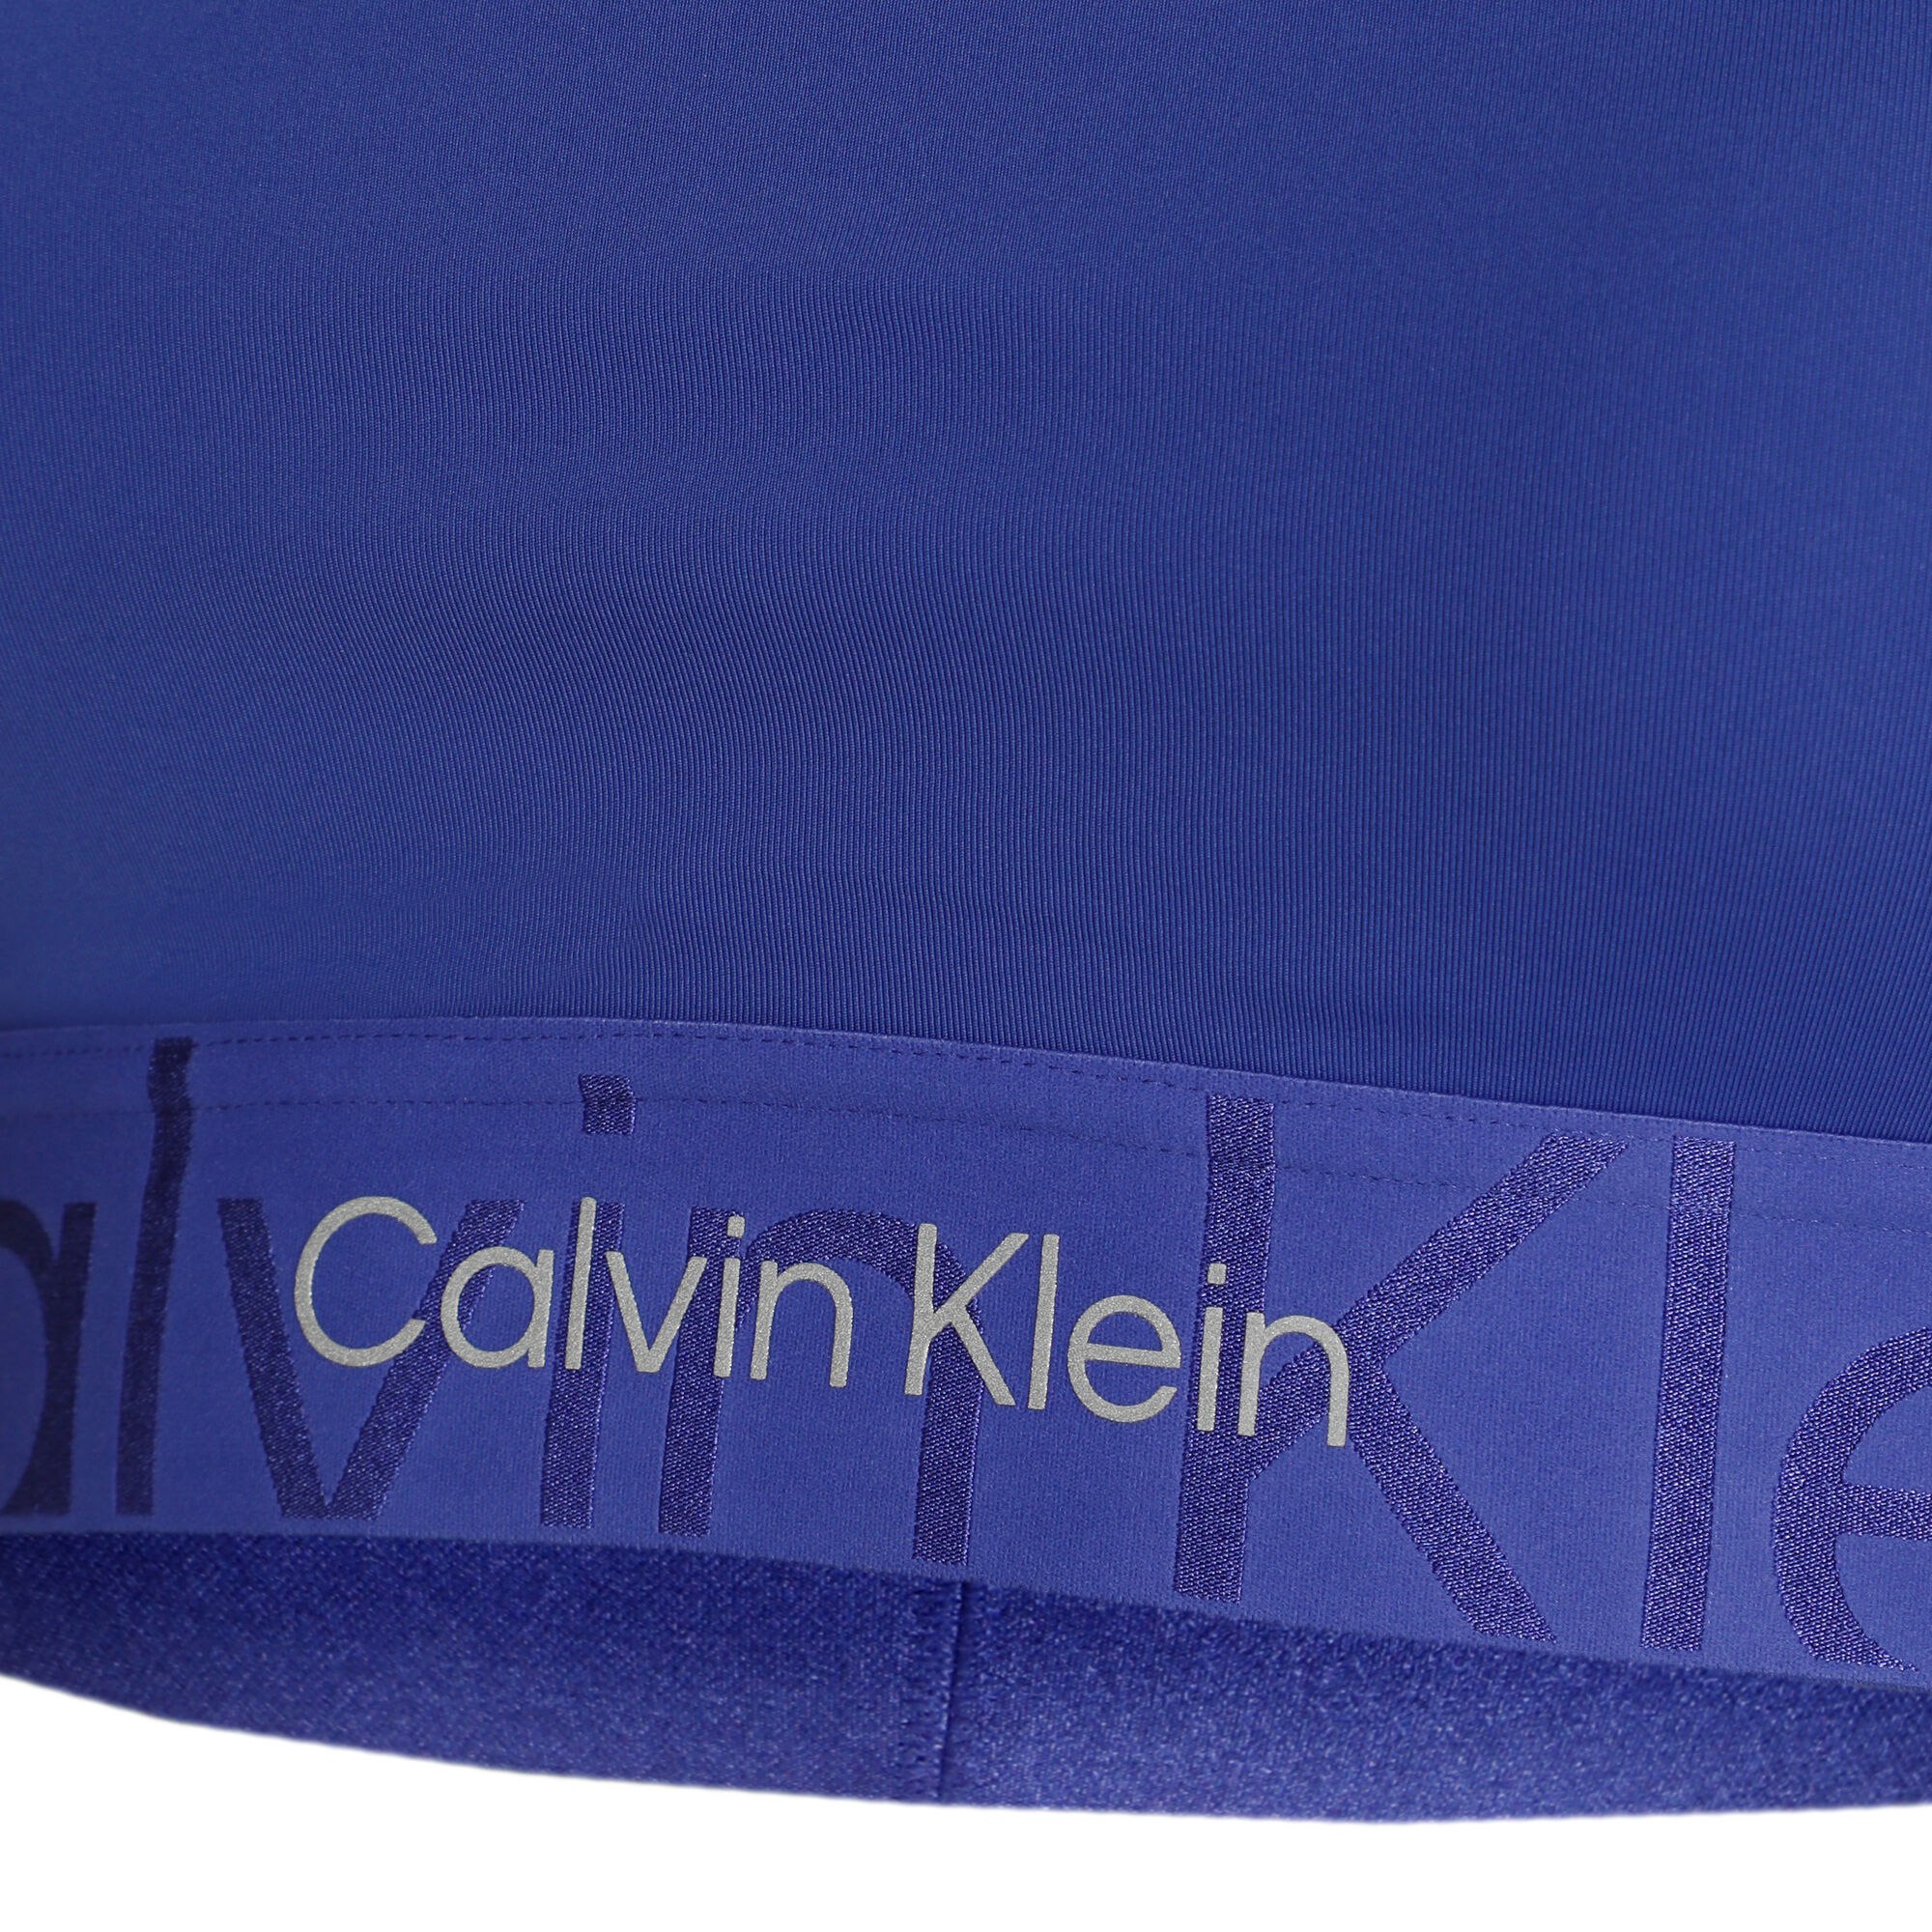 Calvin Klein Performance MEDIUM SUPPORT SPORTS BRA - Medium